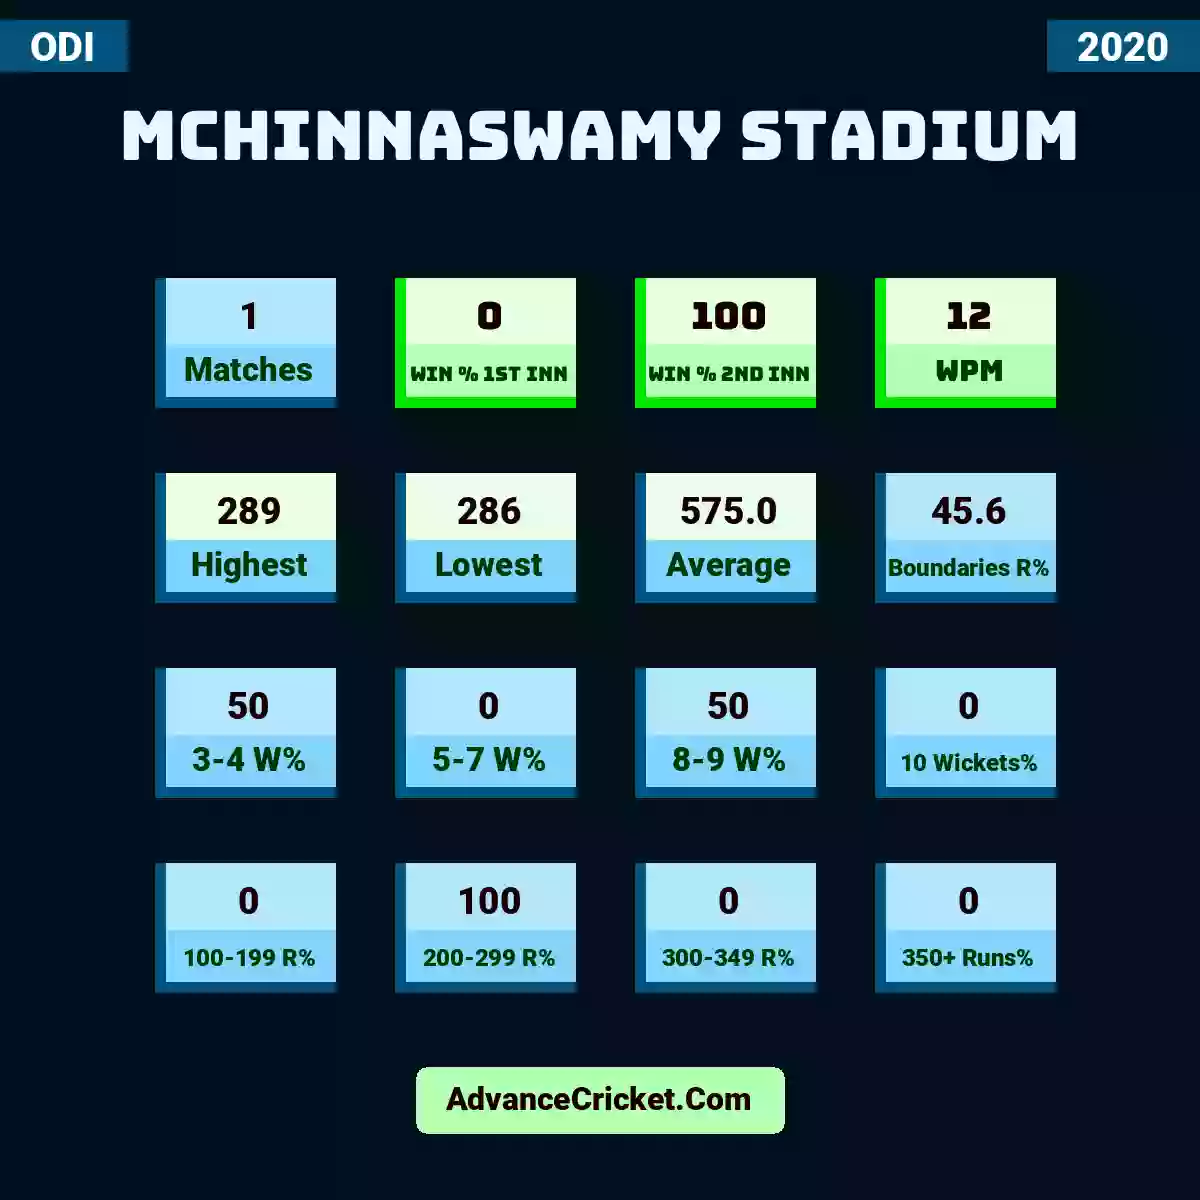 Image showing MChinnaswamy Stadium with Matches: 1, Win % 1st Inn: 0, Win % 2nd Inn: 100, WPM: 12, Highest: 289, Lowest: 286, Average: 575.0, Boundaries R%: 45.6, 3-4 W%: 50, 5-7 W%: 0, 8-9 W%: 50, 10 Wickets%: 0, 100-199 R%: 0, 200-299 R%: 100, 300-349 R%: 0, 350+ Runs%: 0.